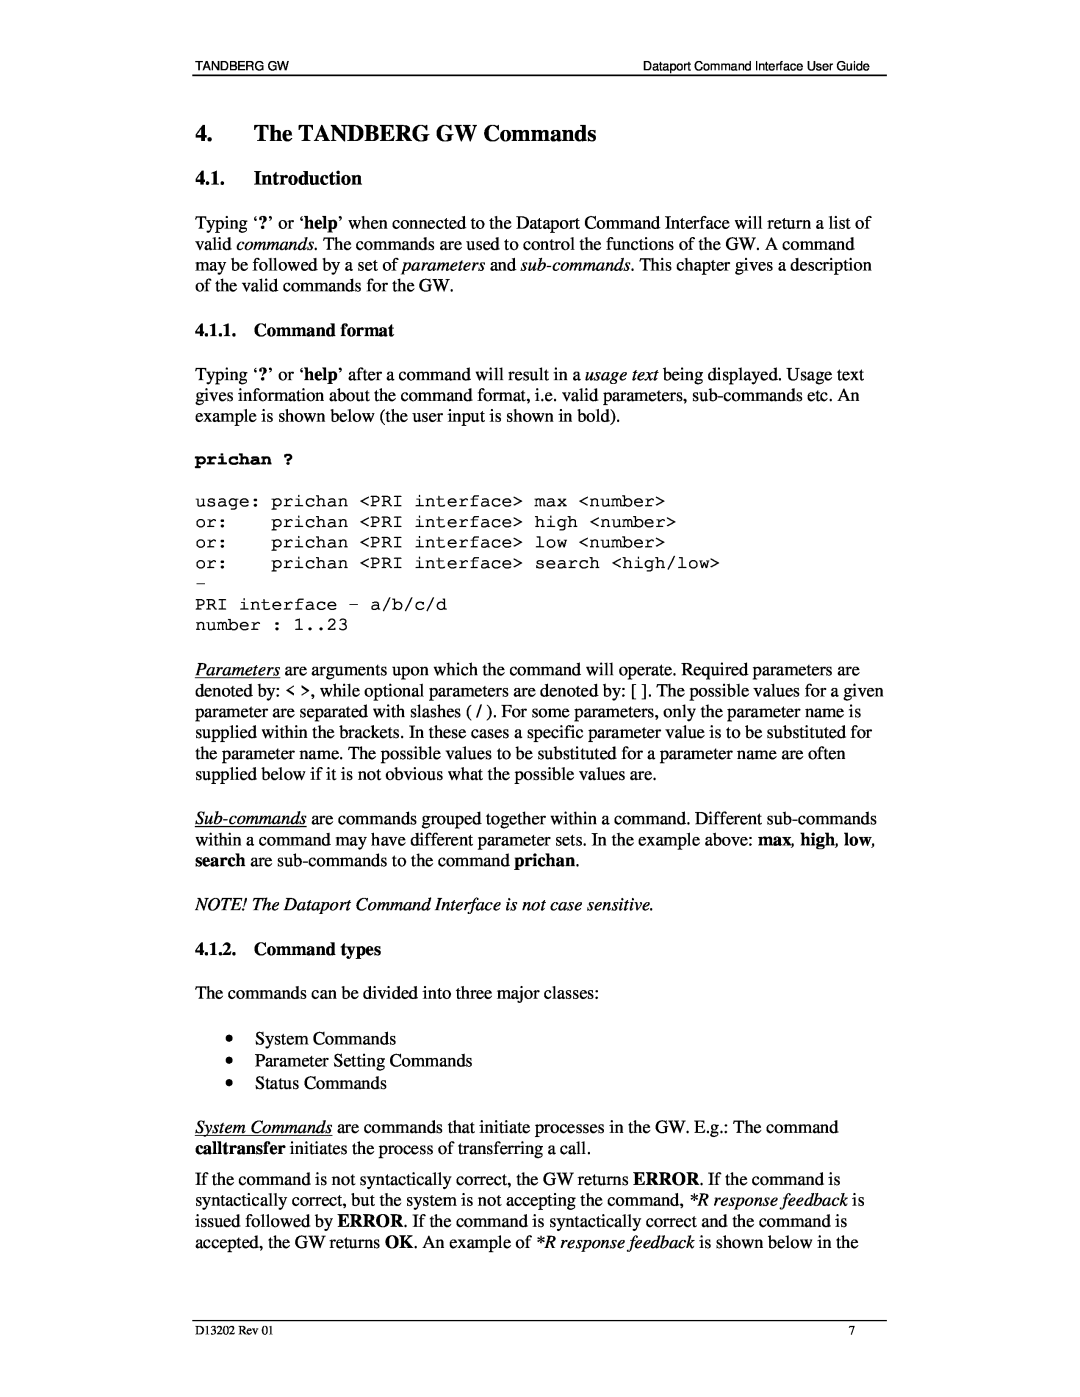 TANDBERG D13202 manual The TANDBERG GW Commands, Introduction, Command format, prichan ?, Command types 